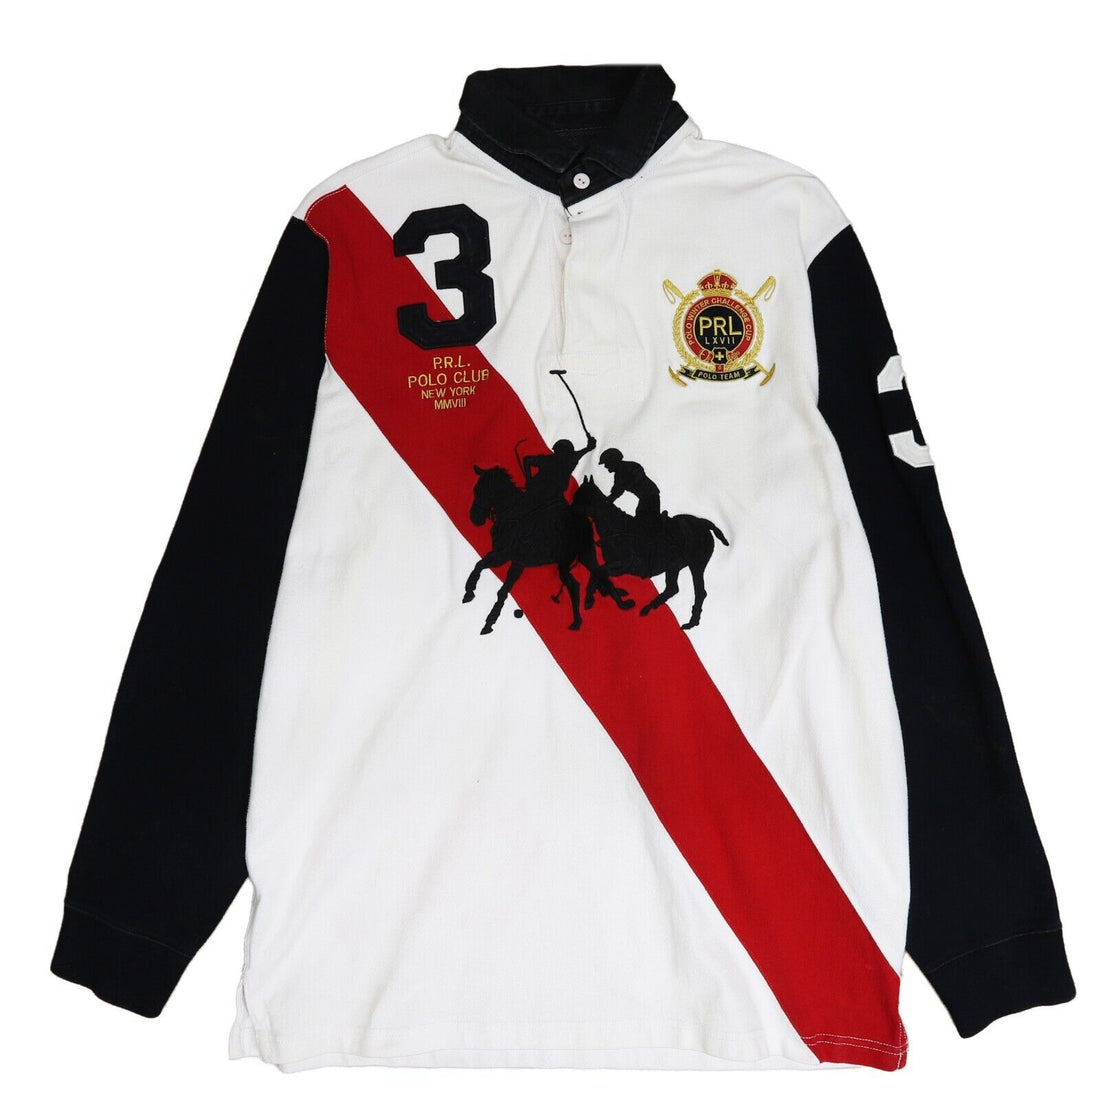 Vintage Polo Ralph Lauren Crest Rugby Shirt Size Medium Long Sleeve